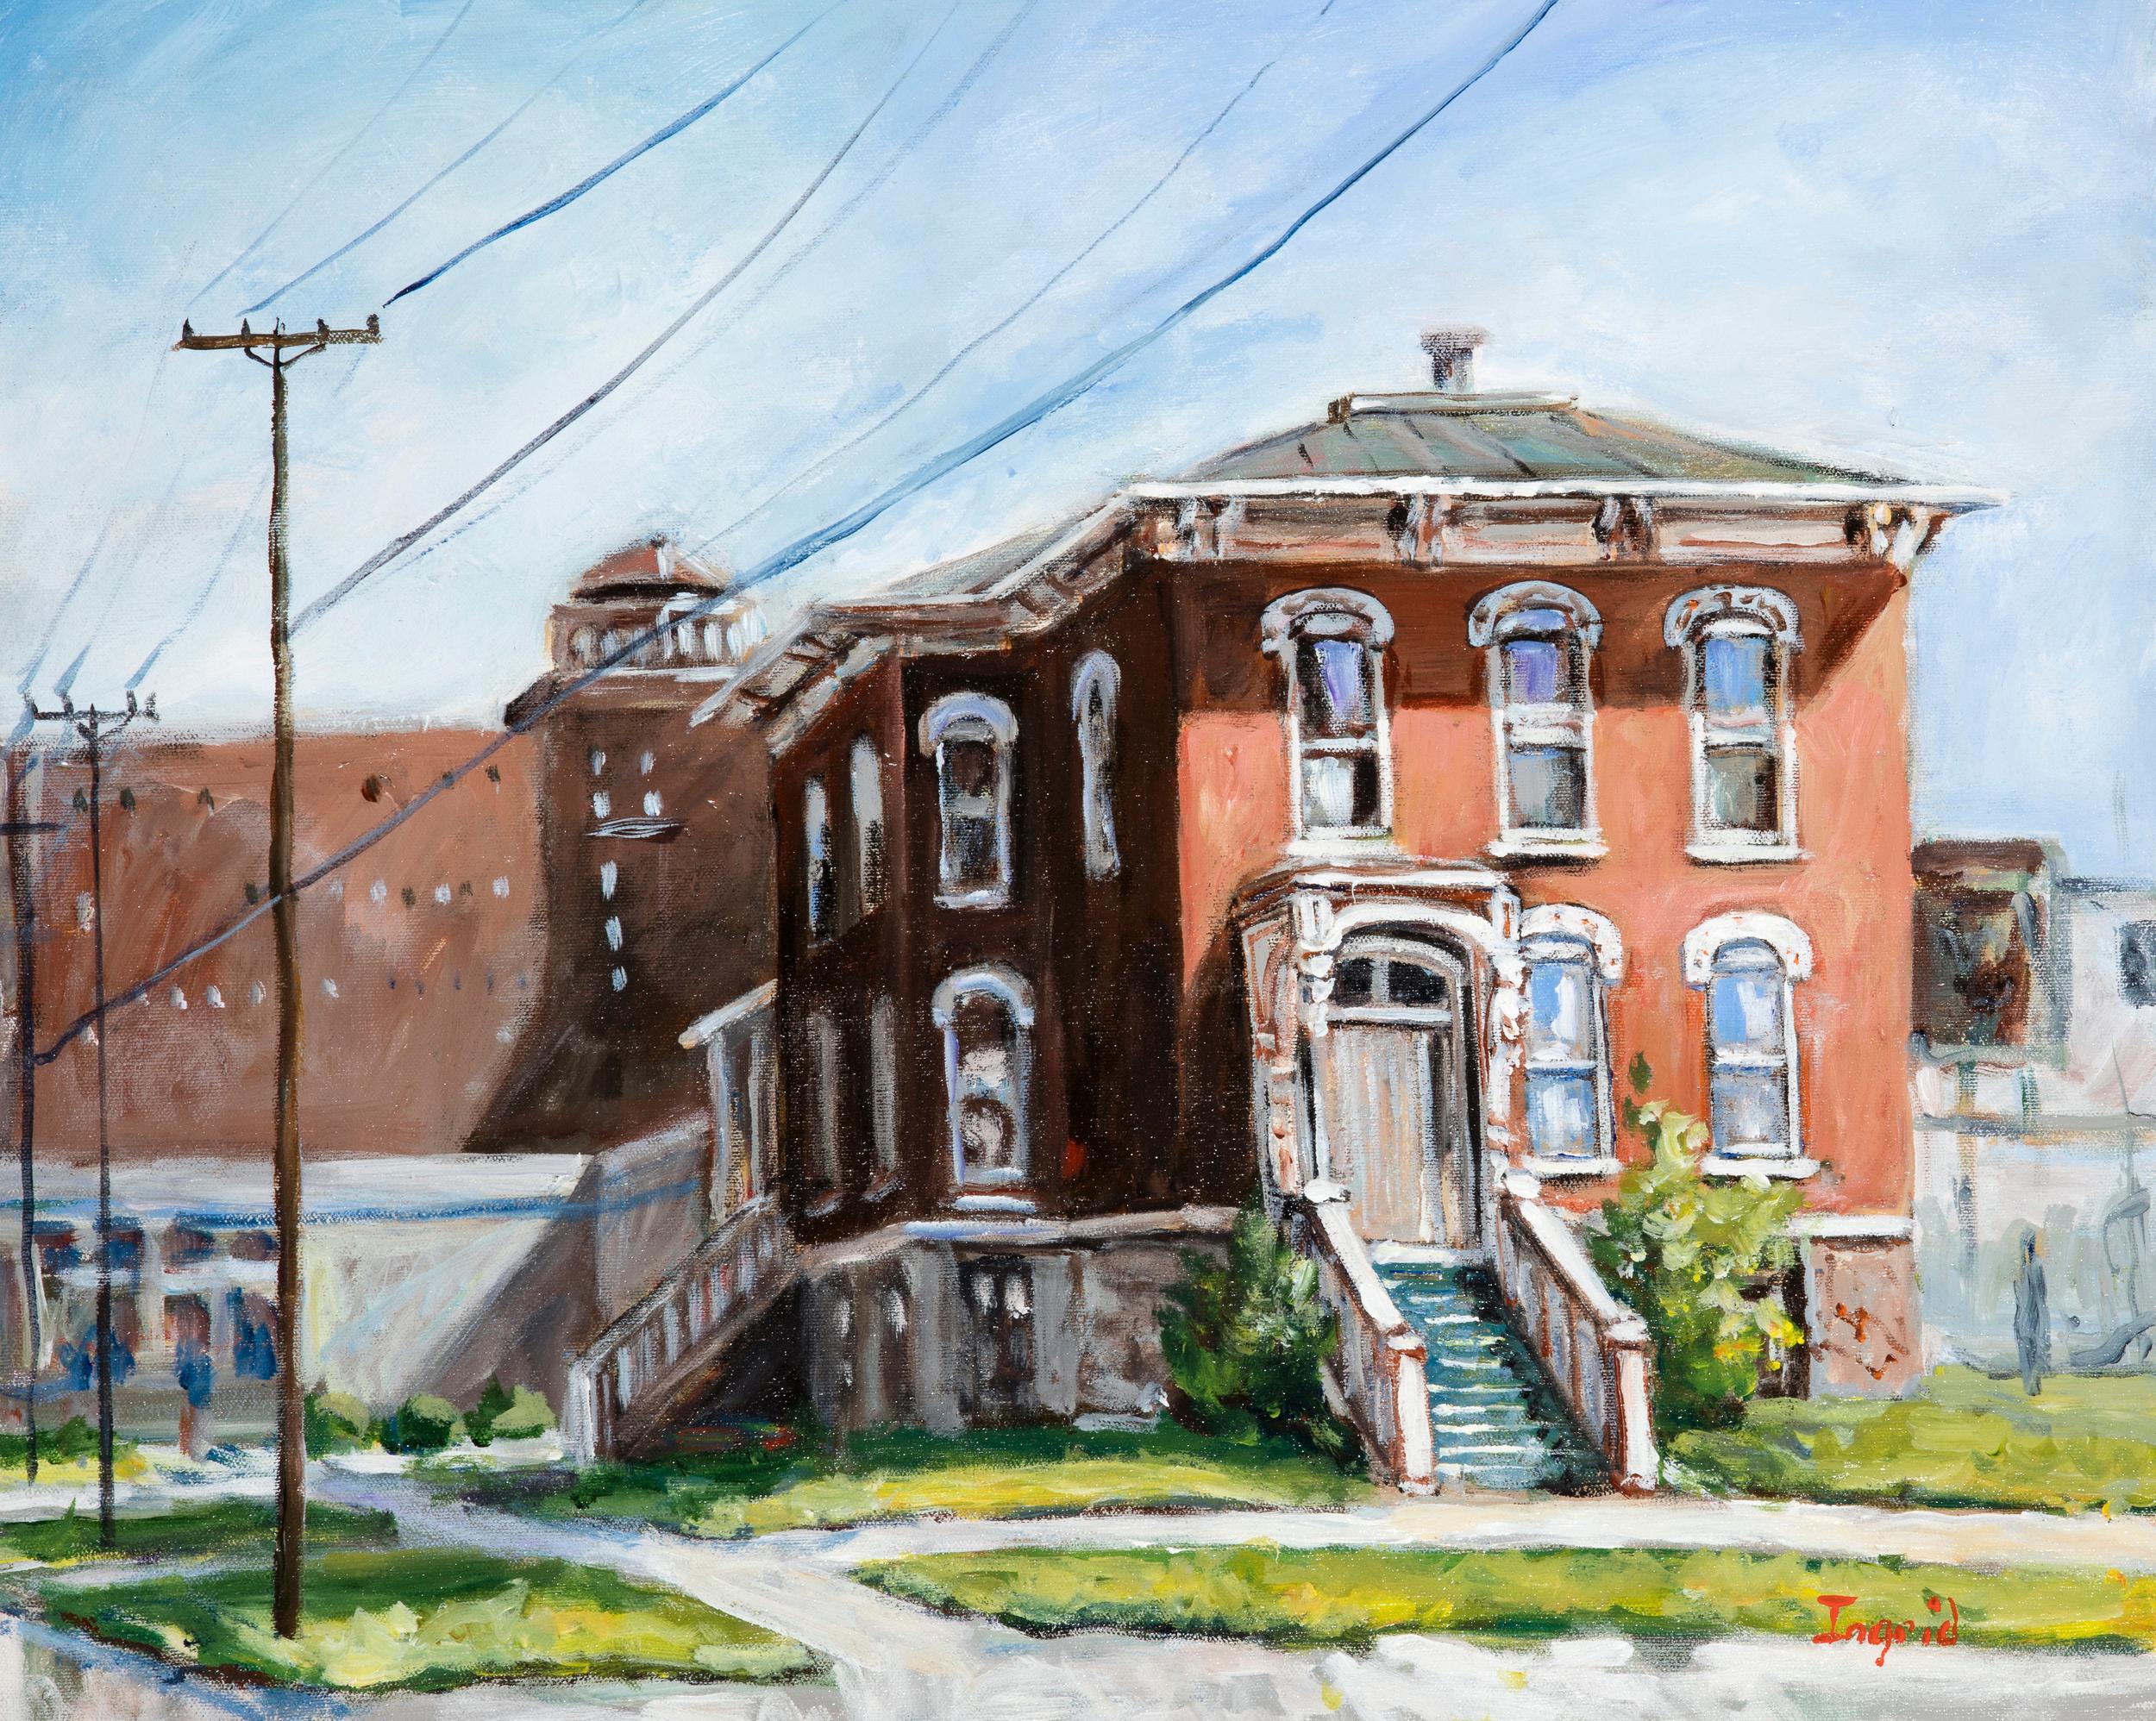 Ingrid Dohm Landscape Painting - Last House Standing, Original Acrylic Cityscape Painting on Canvas, 2013